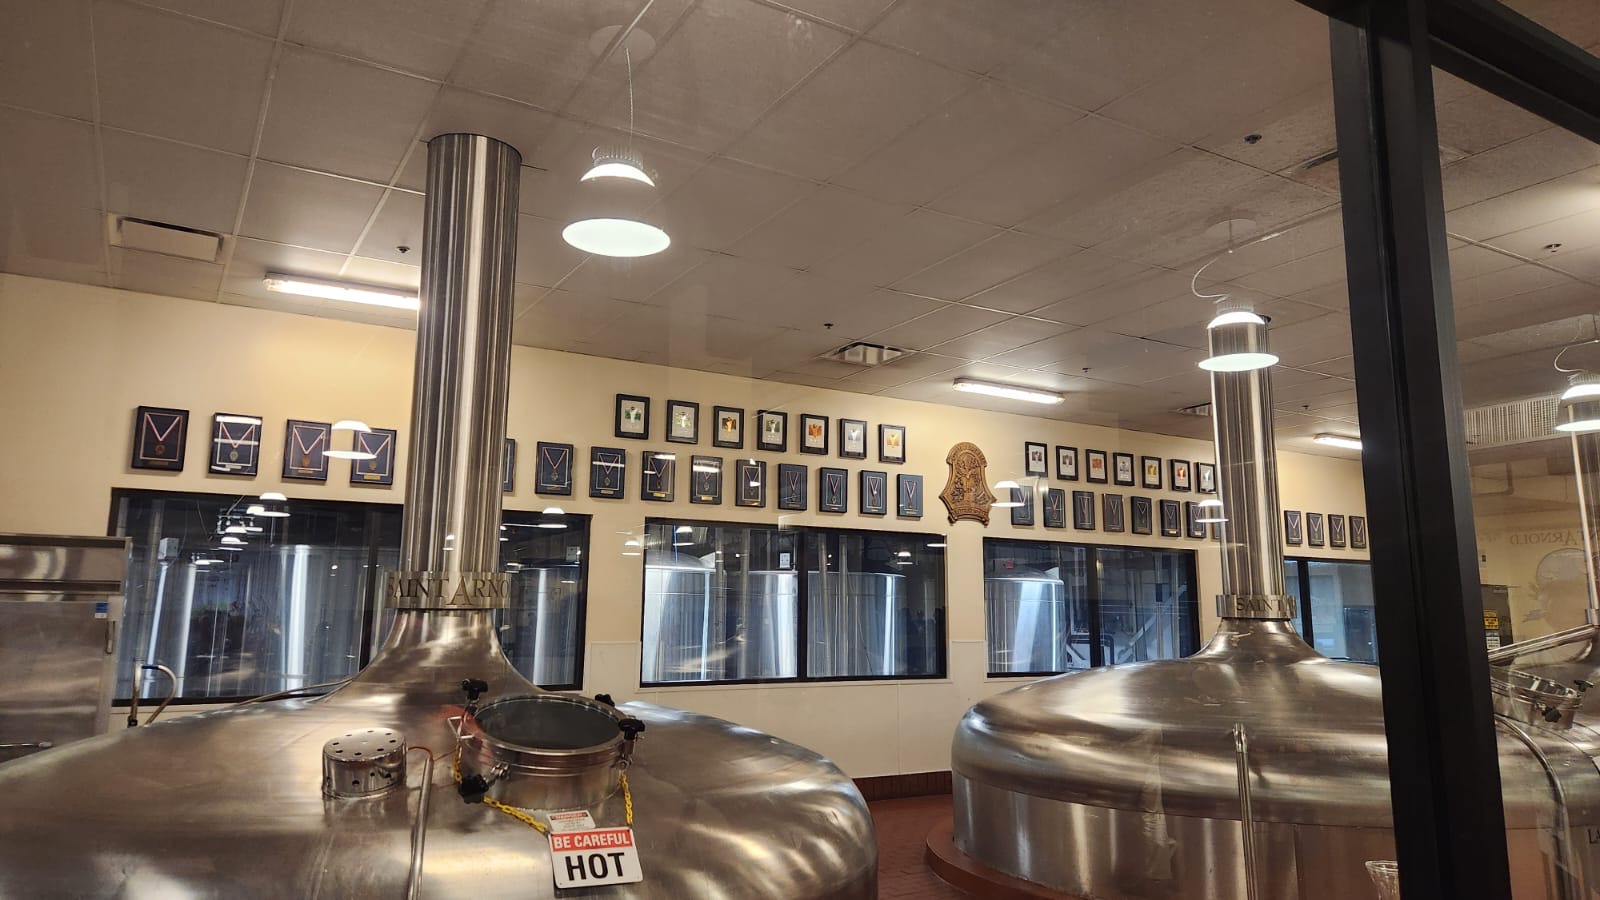 Saint Arnold Brewing Barrel Aged Beer and Cellar Tour, credit Justin Brummer